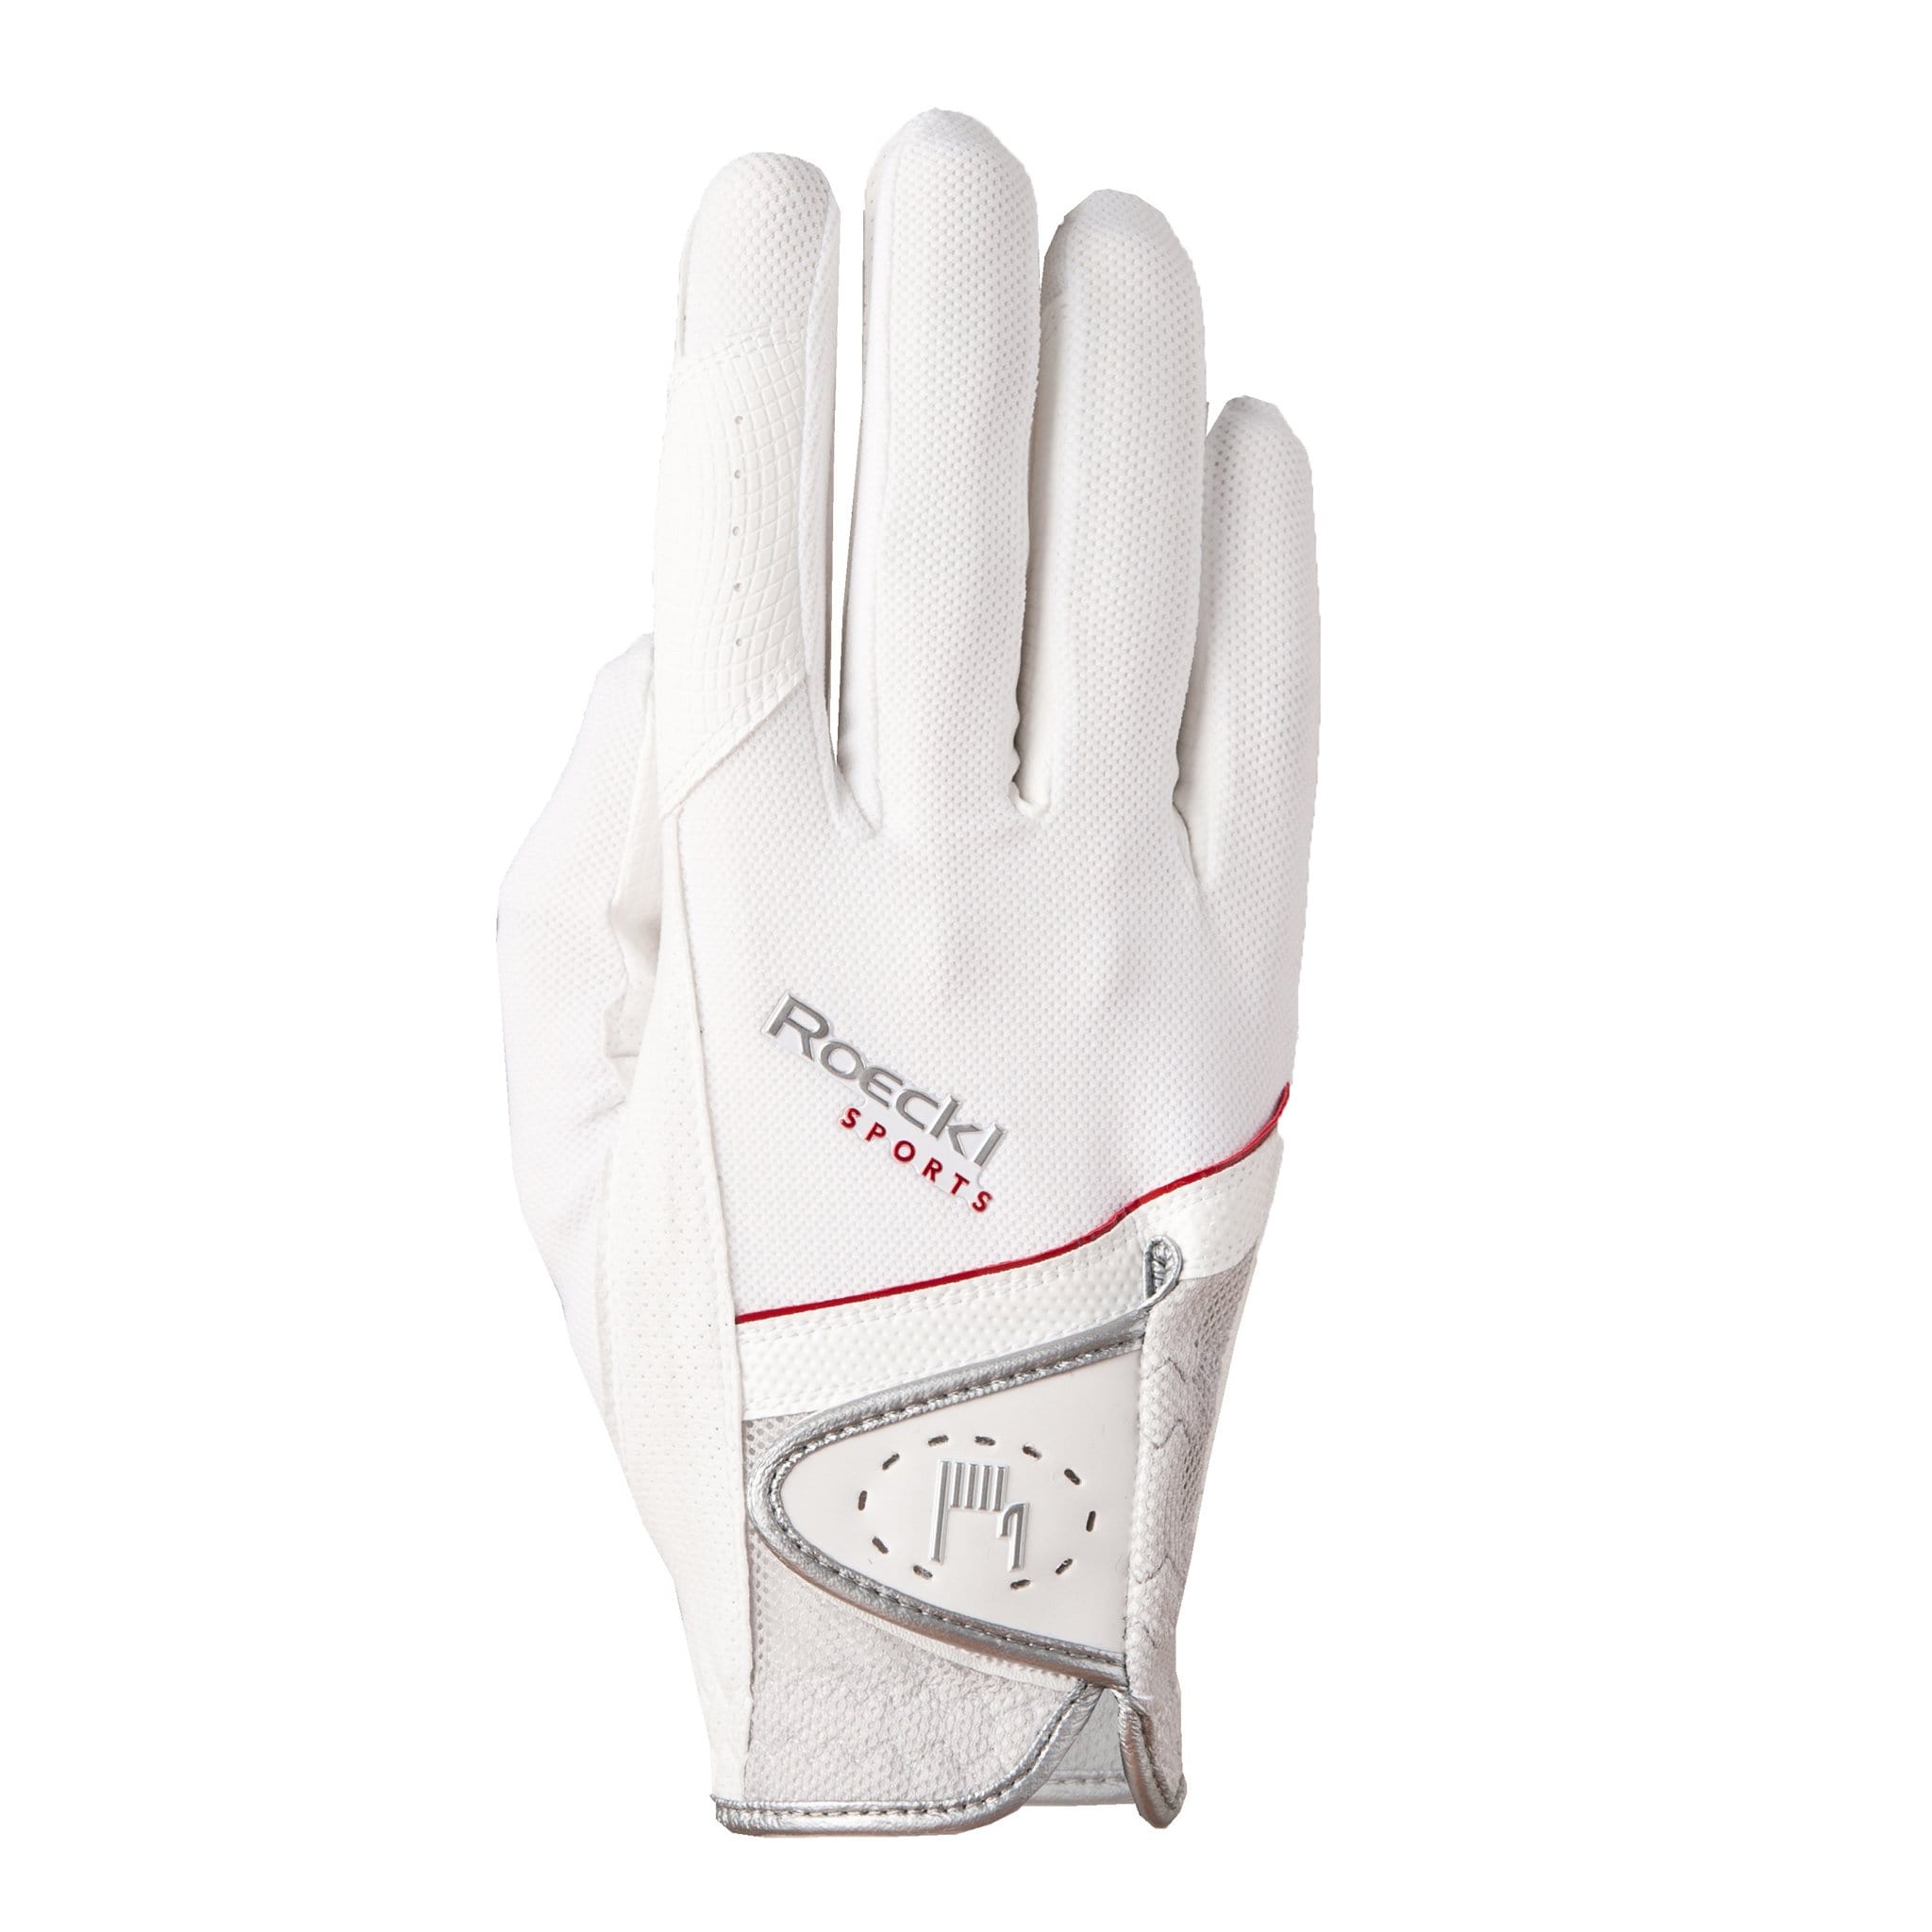 Roeckl London Gloves White 3301-249-100